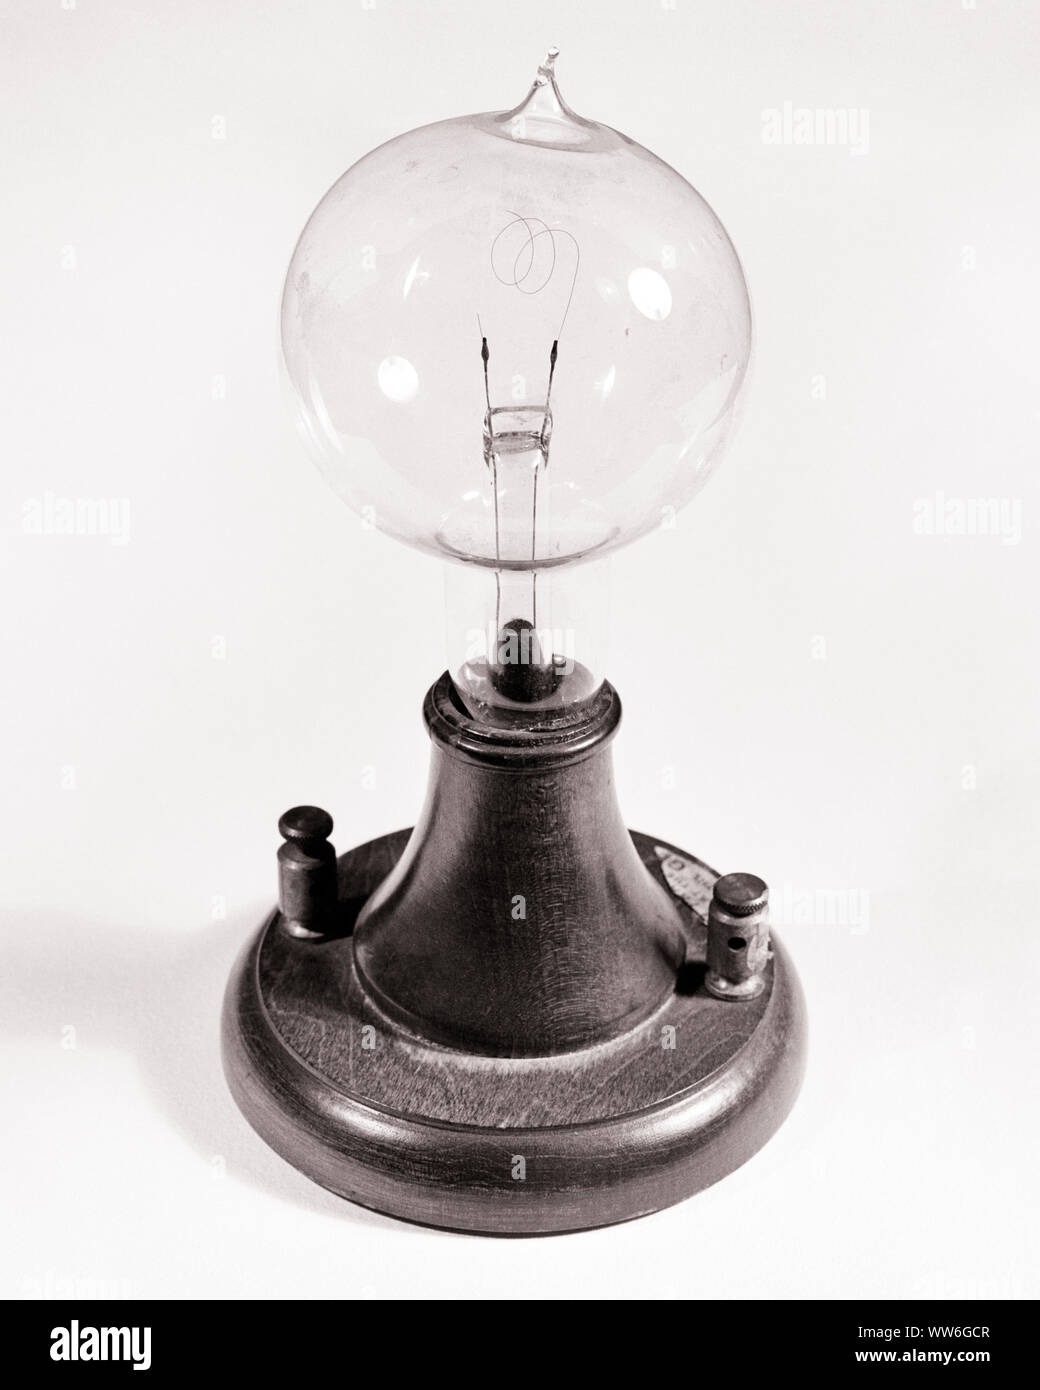 Thomas alva edison lamp hi-res stock photography and images - Alamy